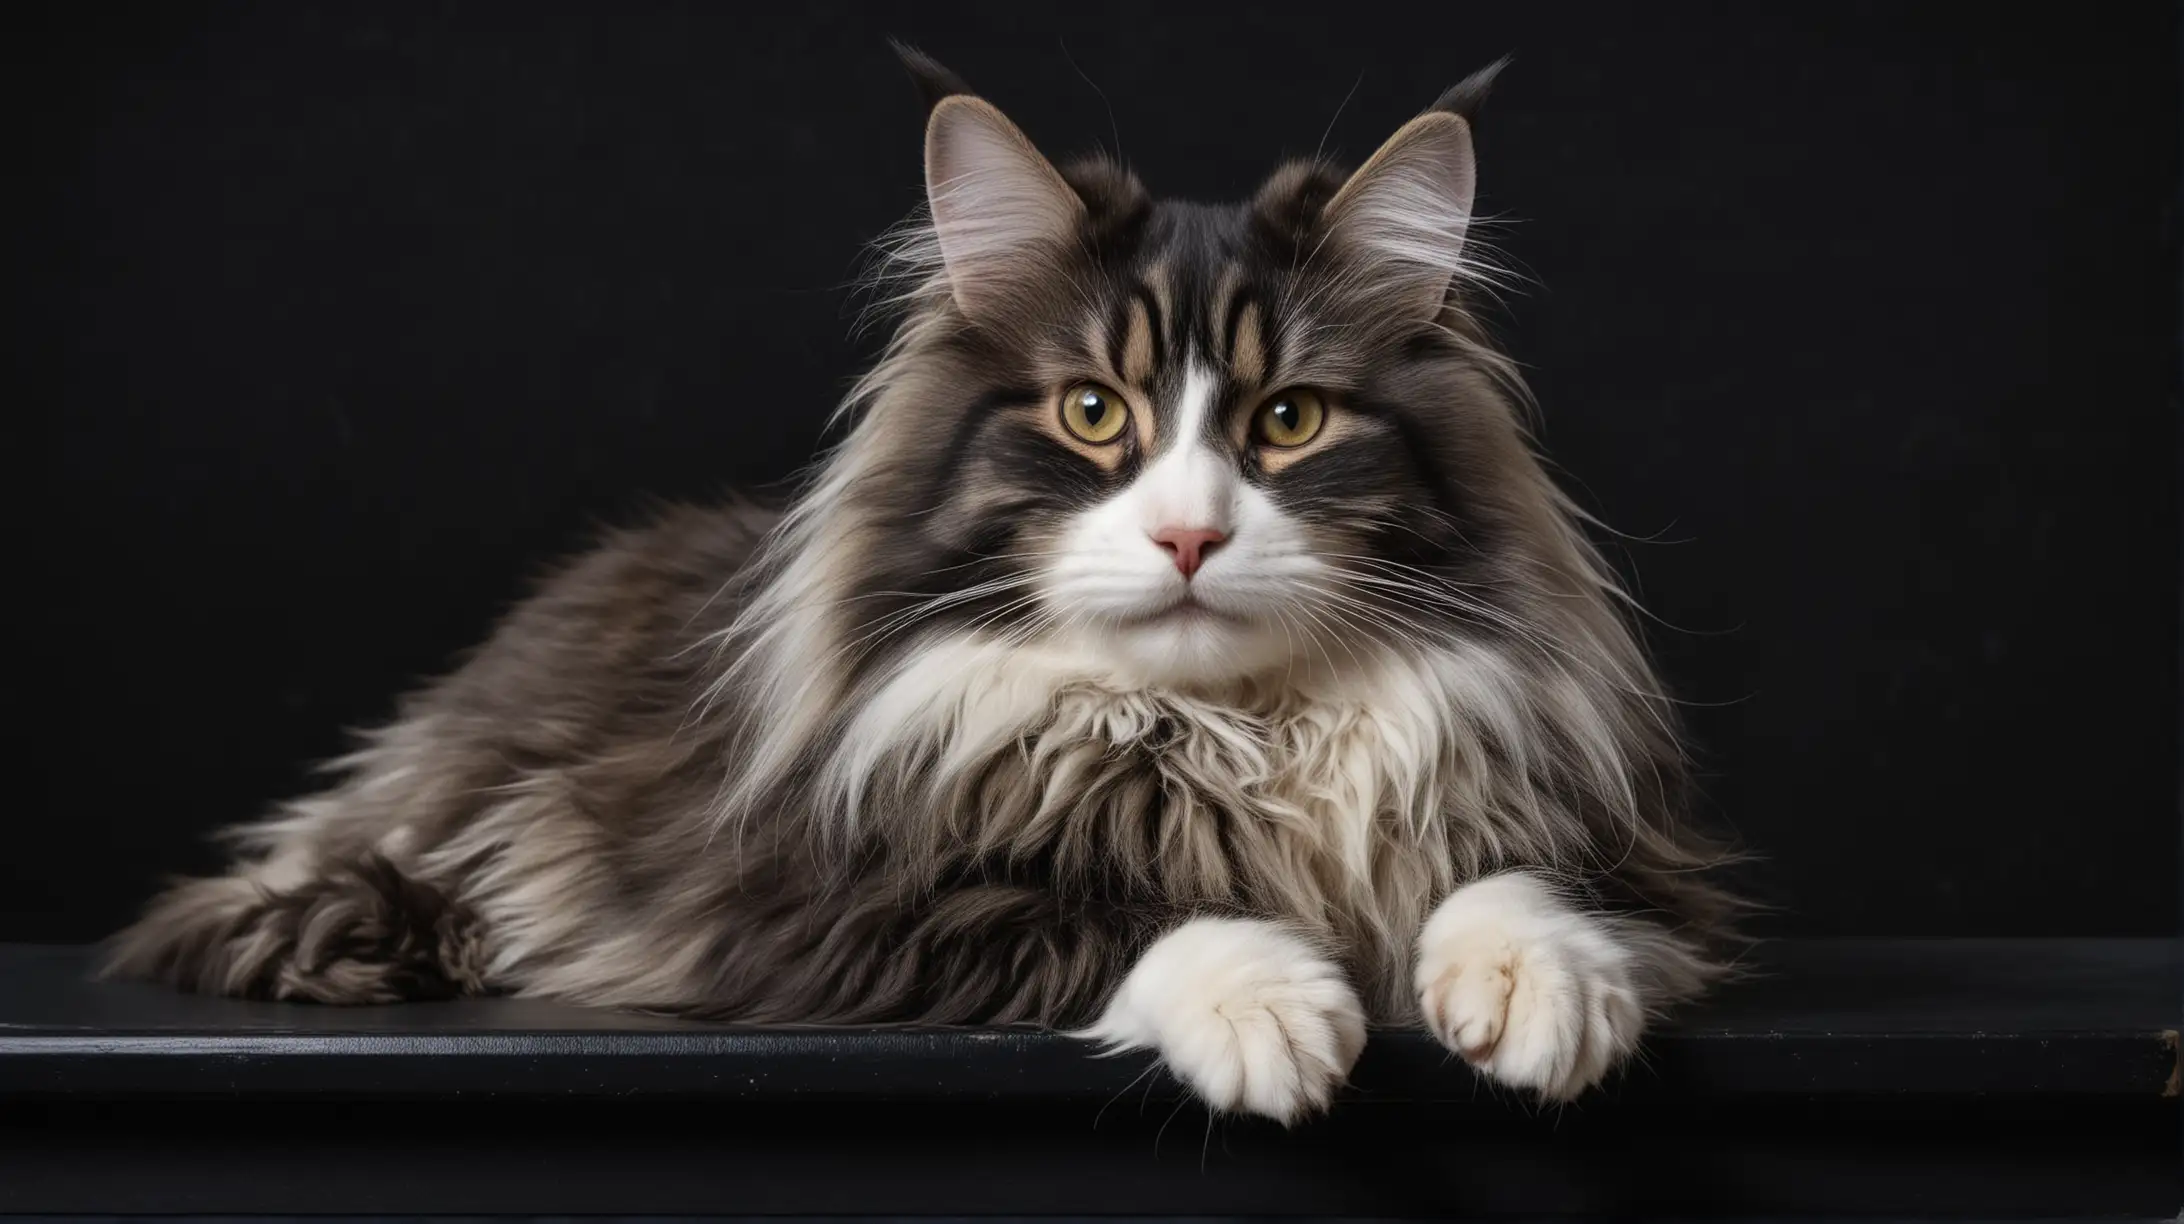 Majestic Norwegian Forest Cat Portrait on Elegant Black Shelf